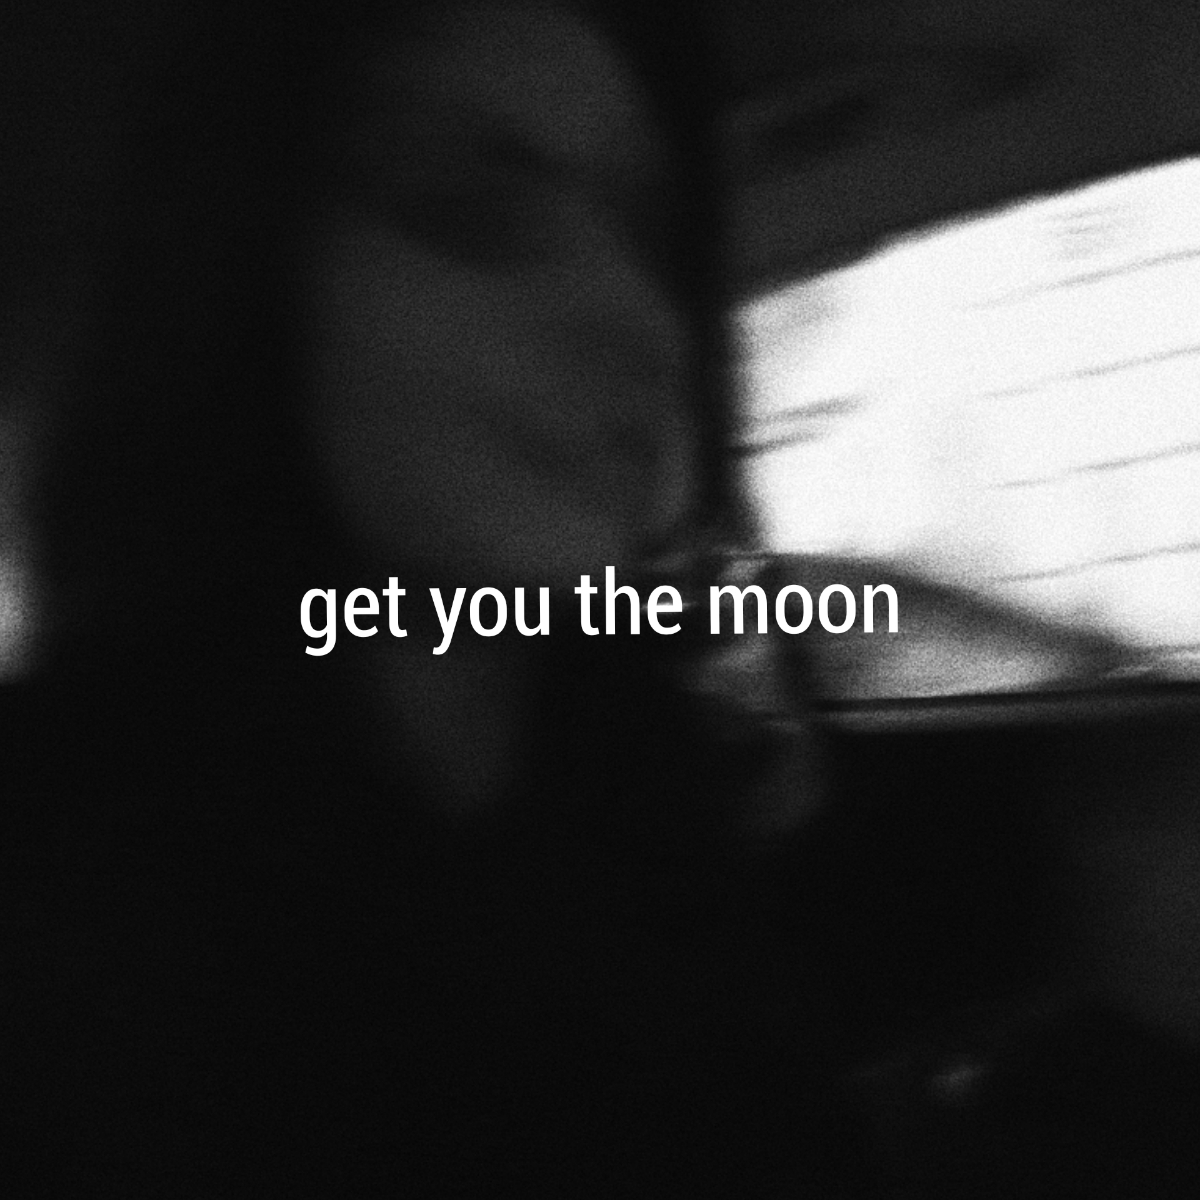 Budata Kina - get you the moon (ft. Snow)